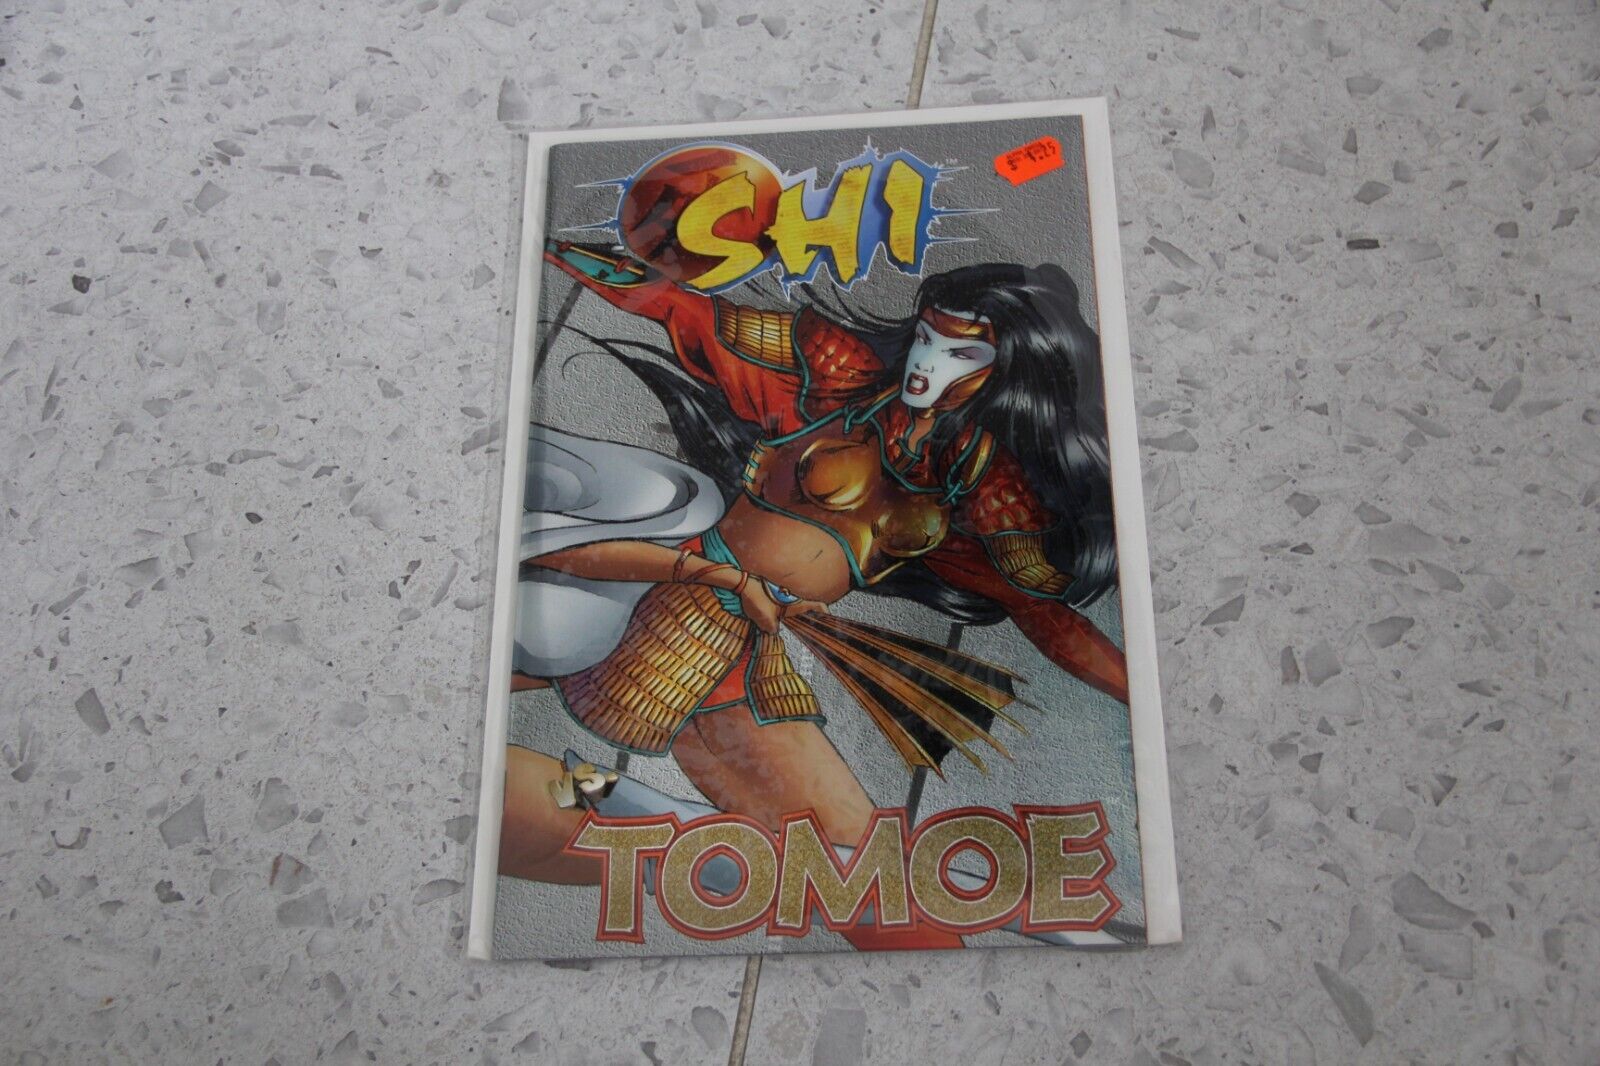 SHI vs TOMOE Crusade Comic Book * CHROMIUM COVER